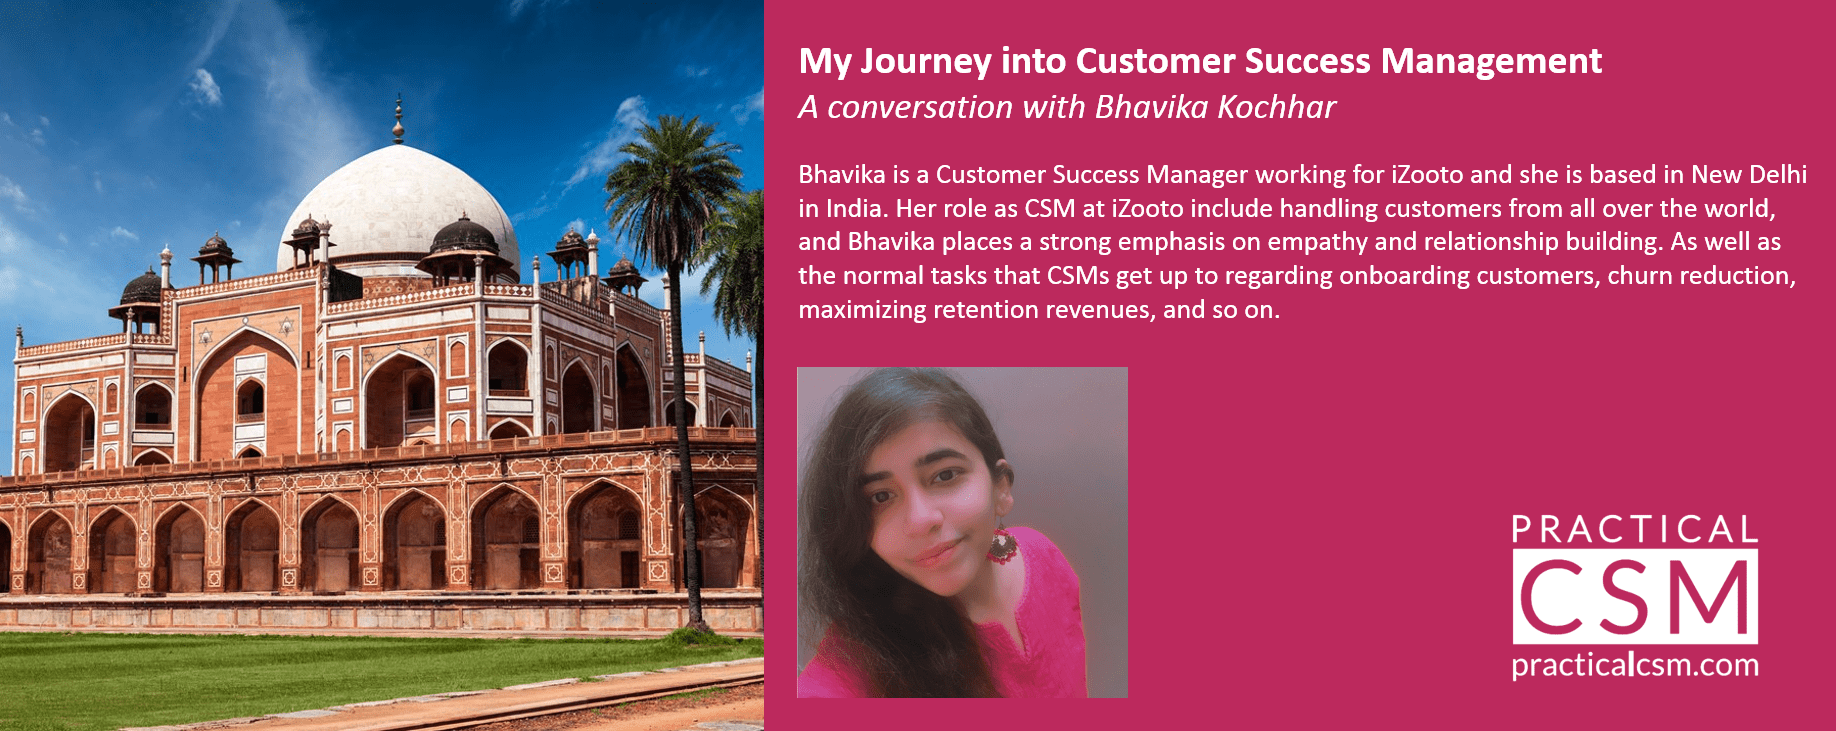 Practical CSM Journey into Customer Success Management with Bhavika Kochhar